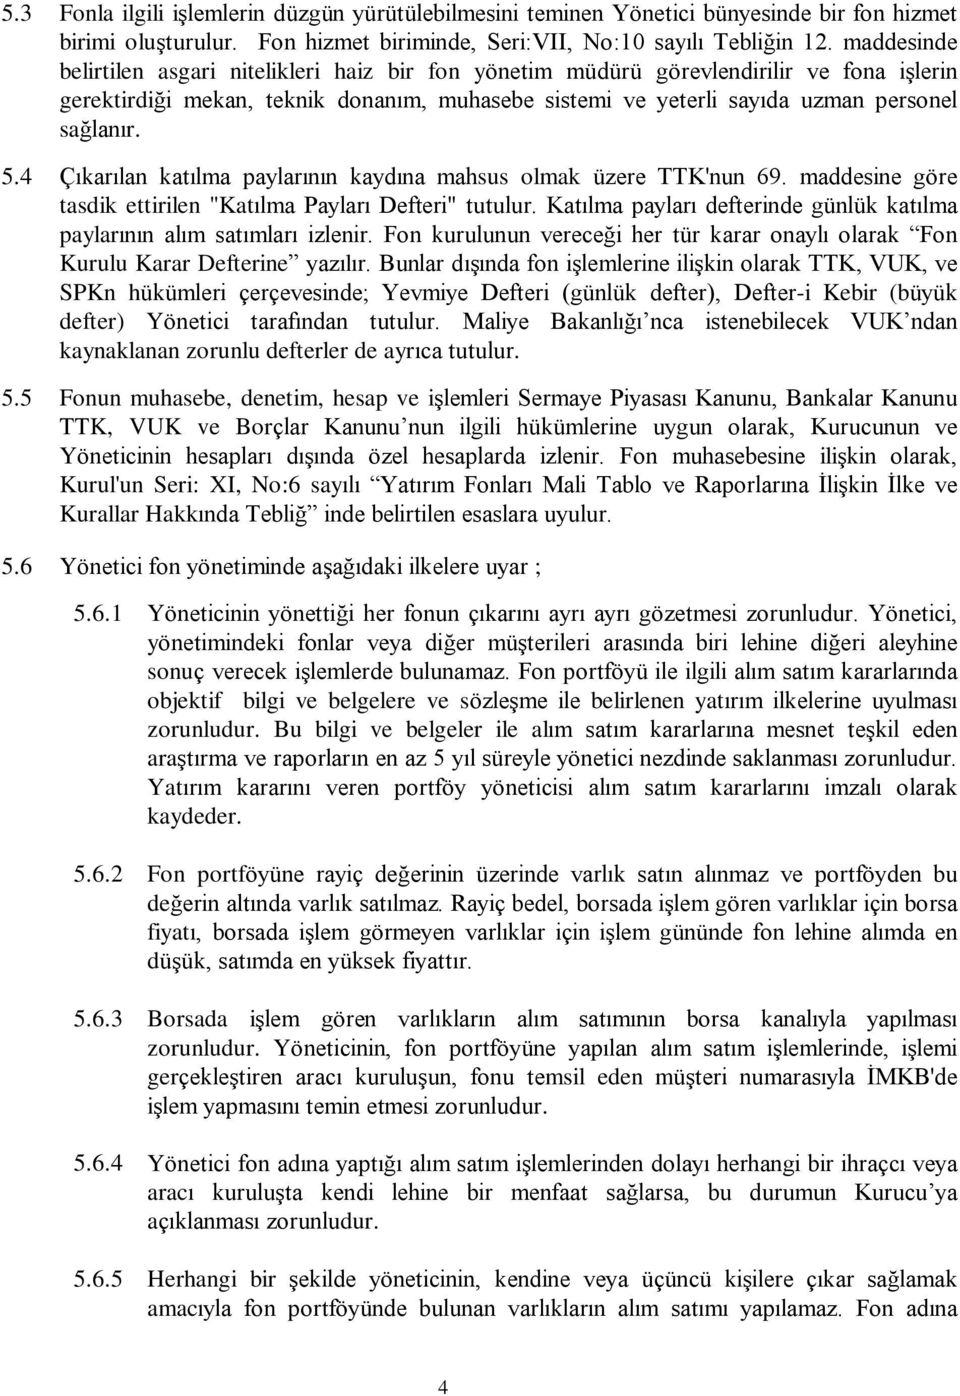 4 Çýkarýlan katýlma paylarýnýn kaydýna mahsus olmak üzere TTK'nun 69. maddesine göre tasdik ettirilen "Katýlma Paylarý Defteri" tutulur.